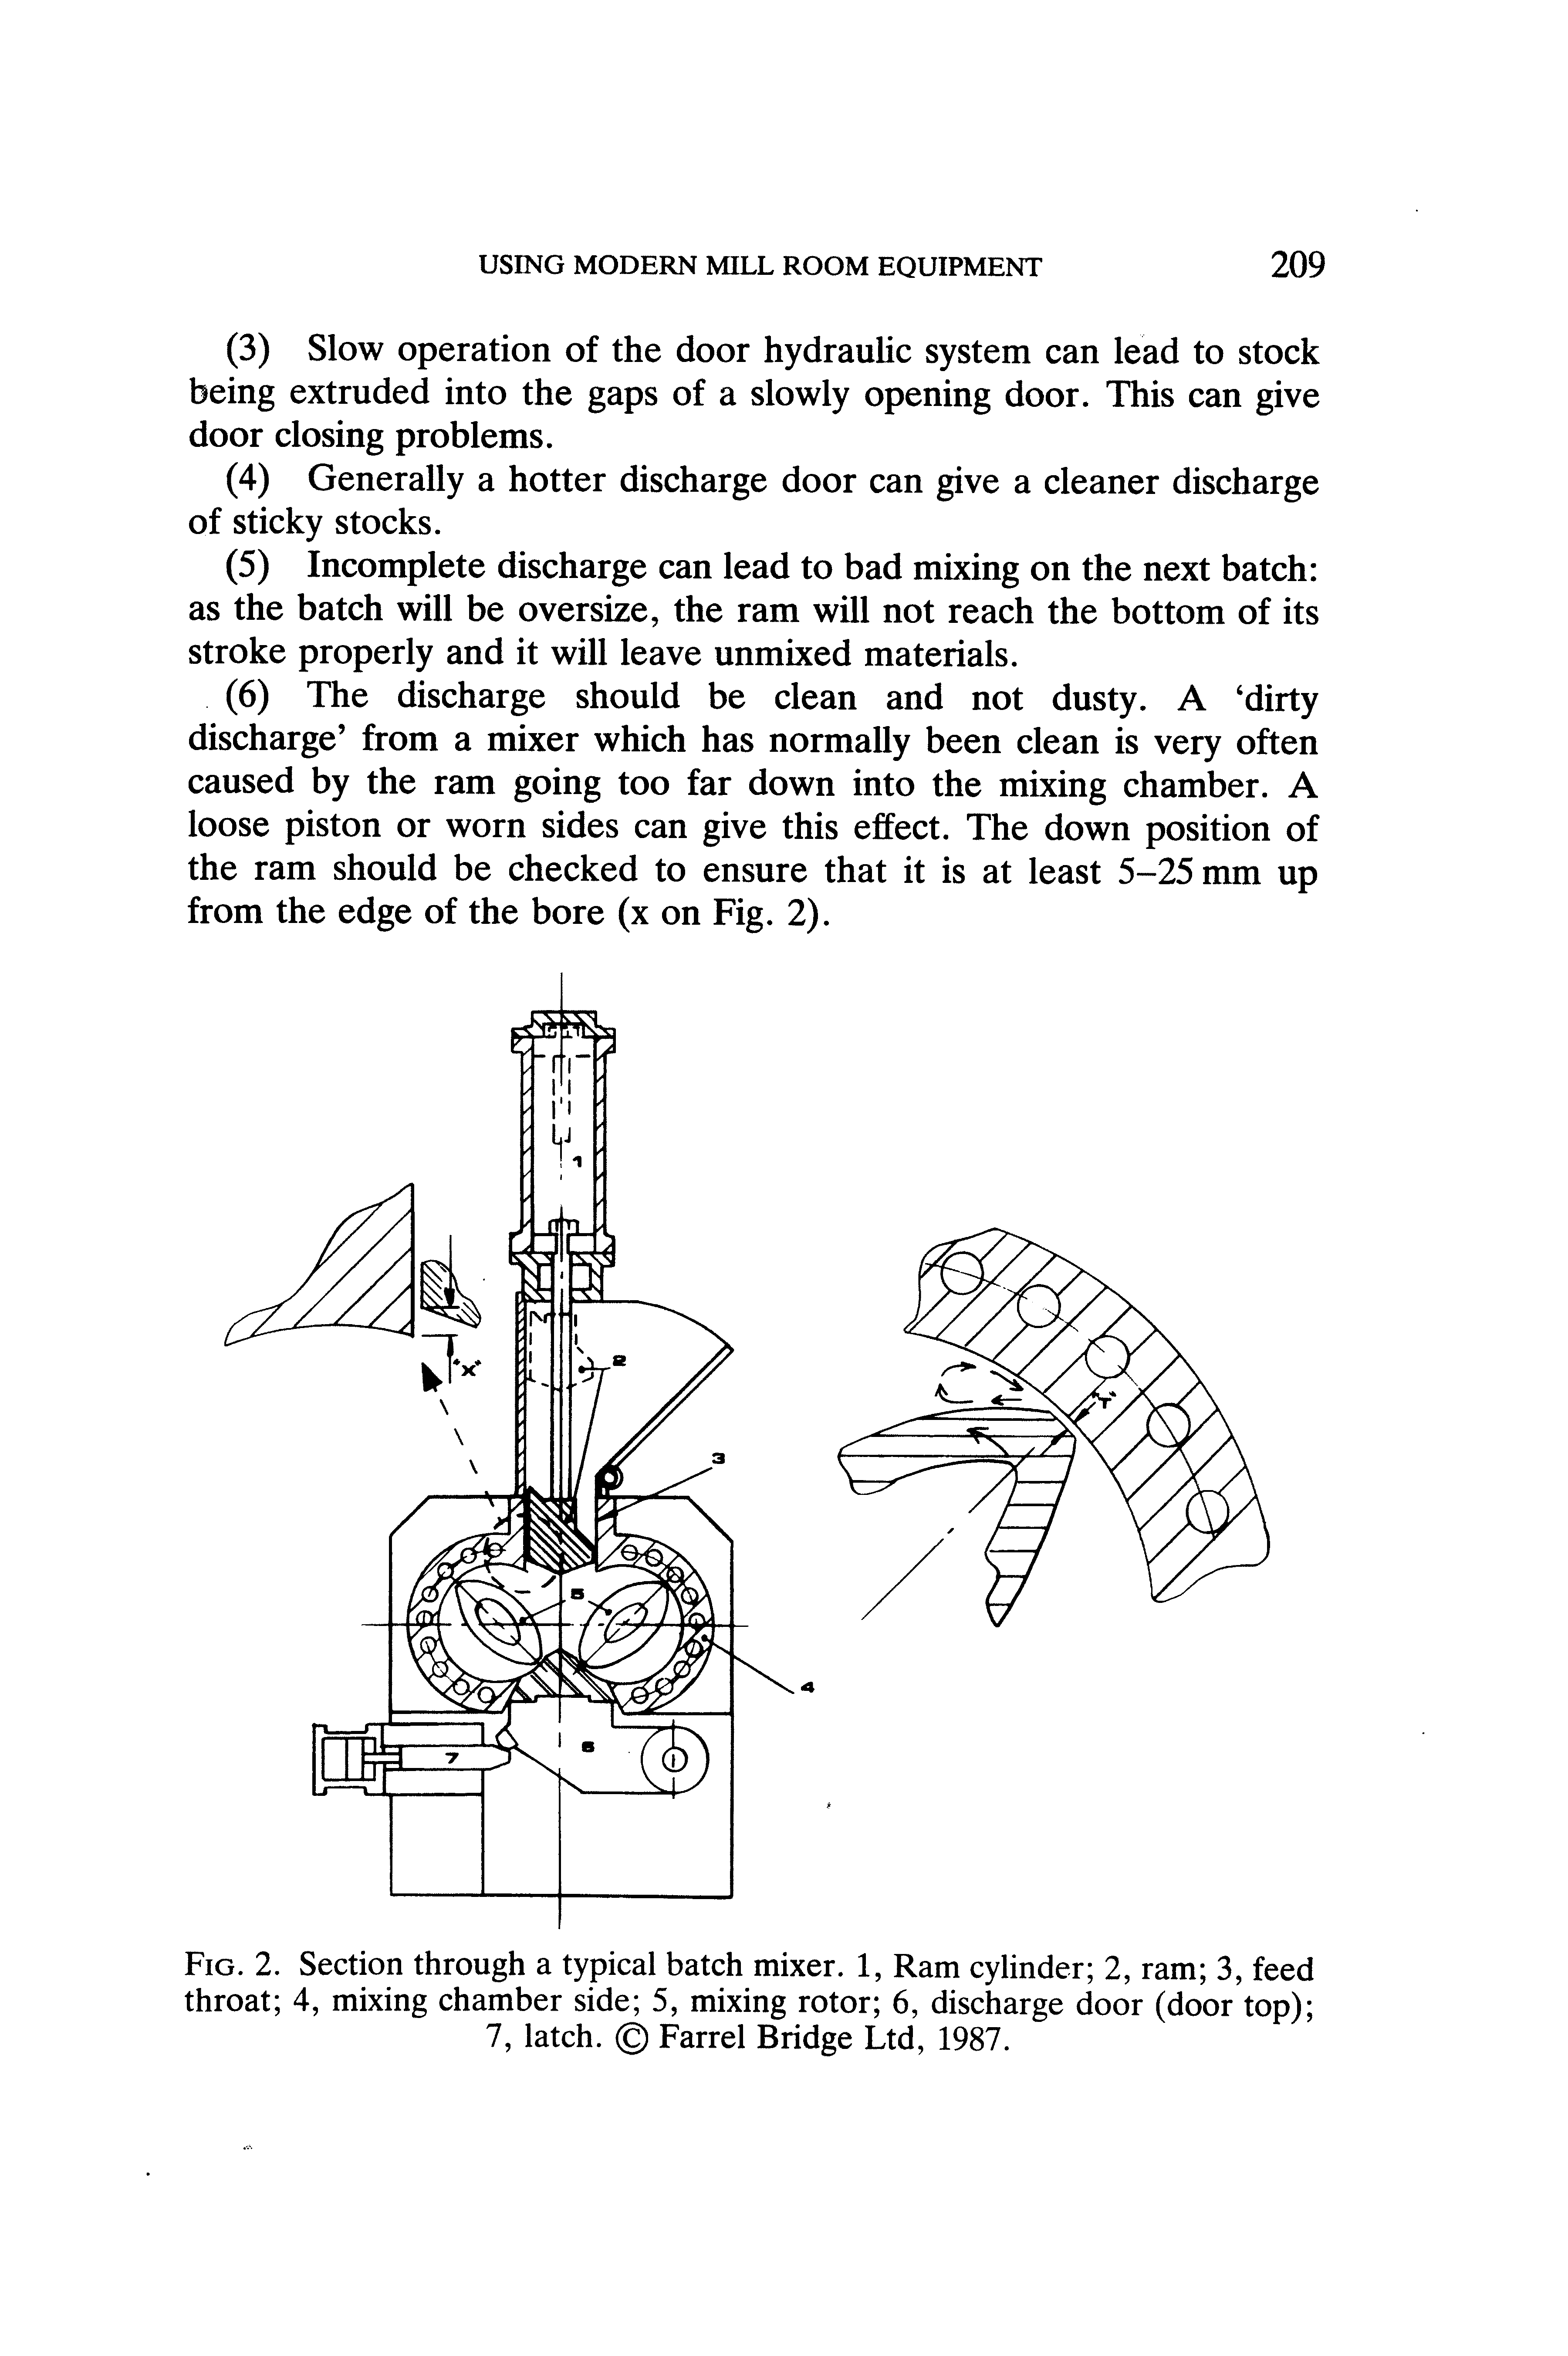 Fig. 2. Section through a typical batch mixer. 1, Ram cylinder 2, ram 3, feed throat 4, mixing chamber side 5, mixing rotor 6, discharge door (door top) 7, latch. Parrel Bridge Ltd, 1987.